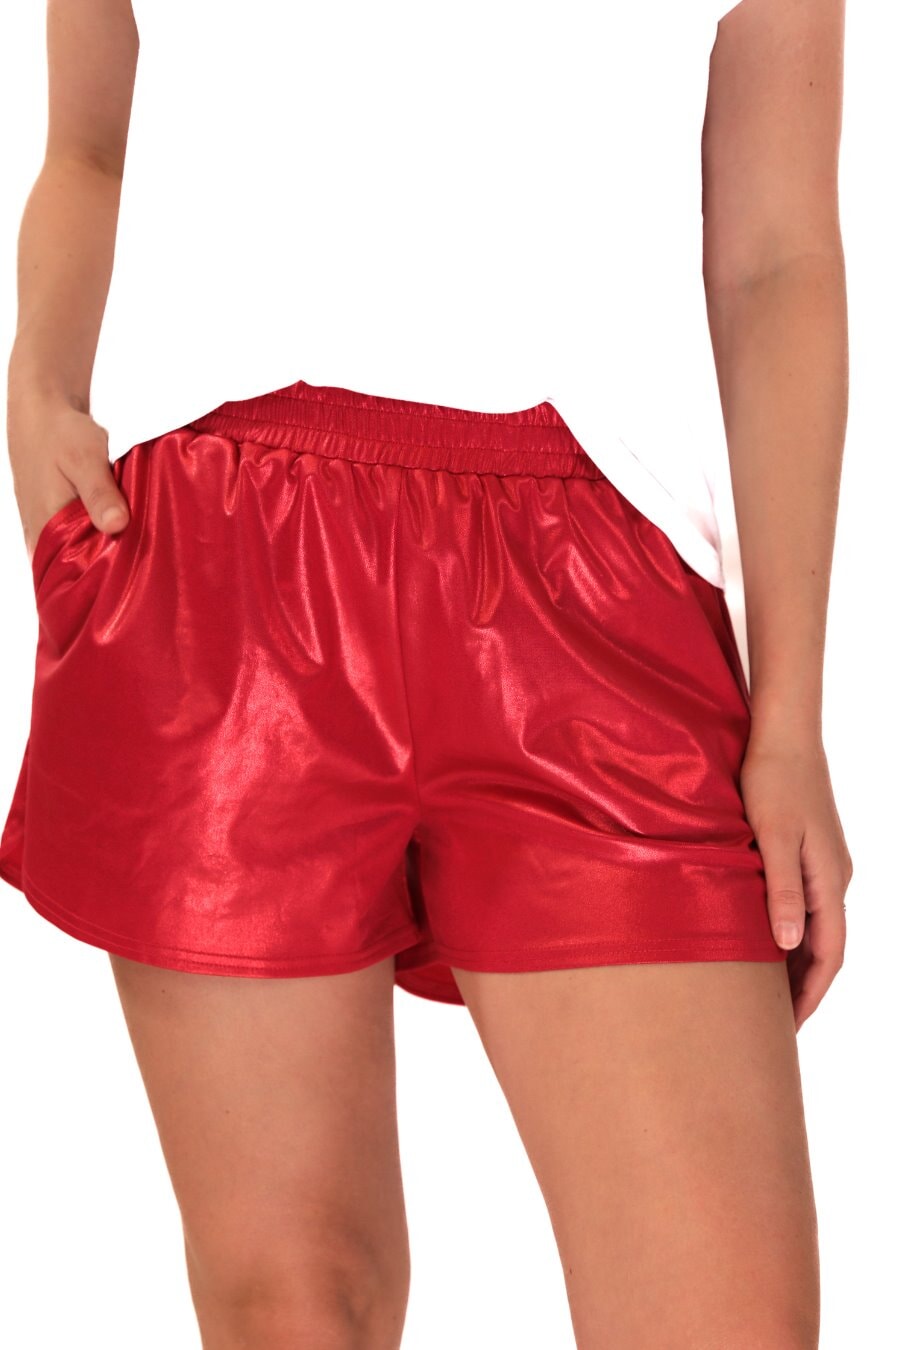 PREORDER-Made To Shine Metallic Shorts